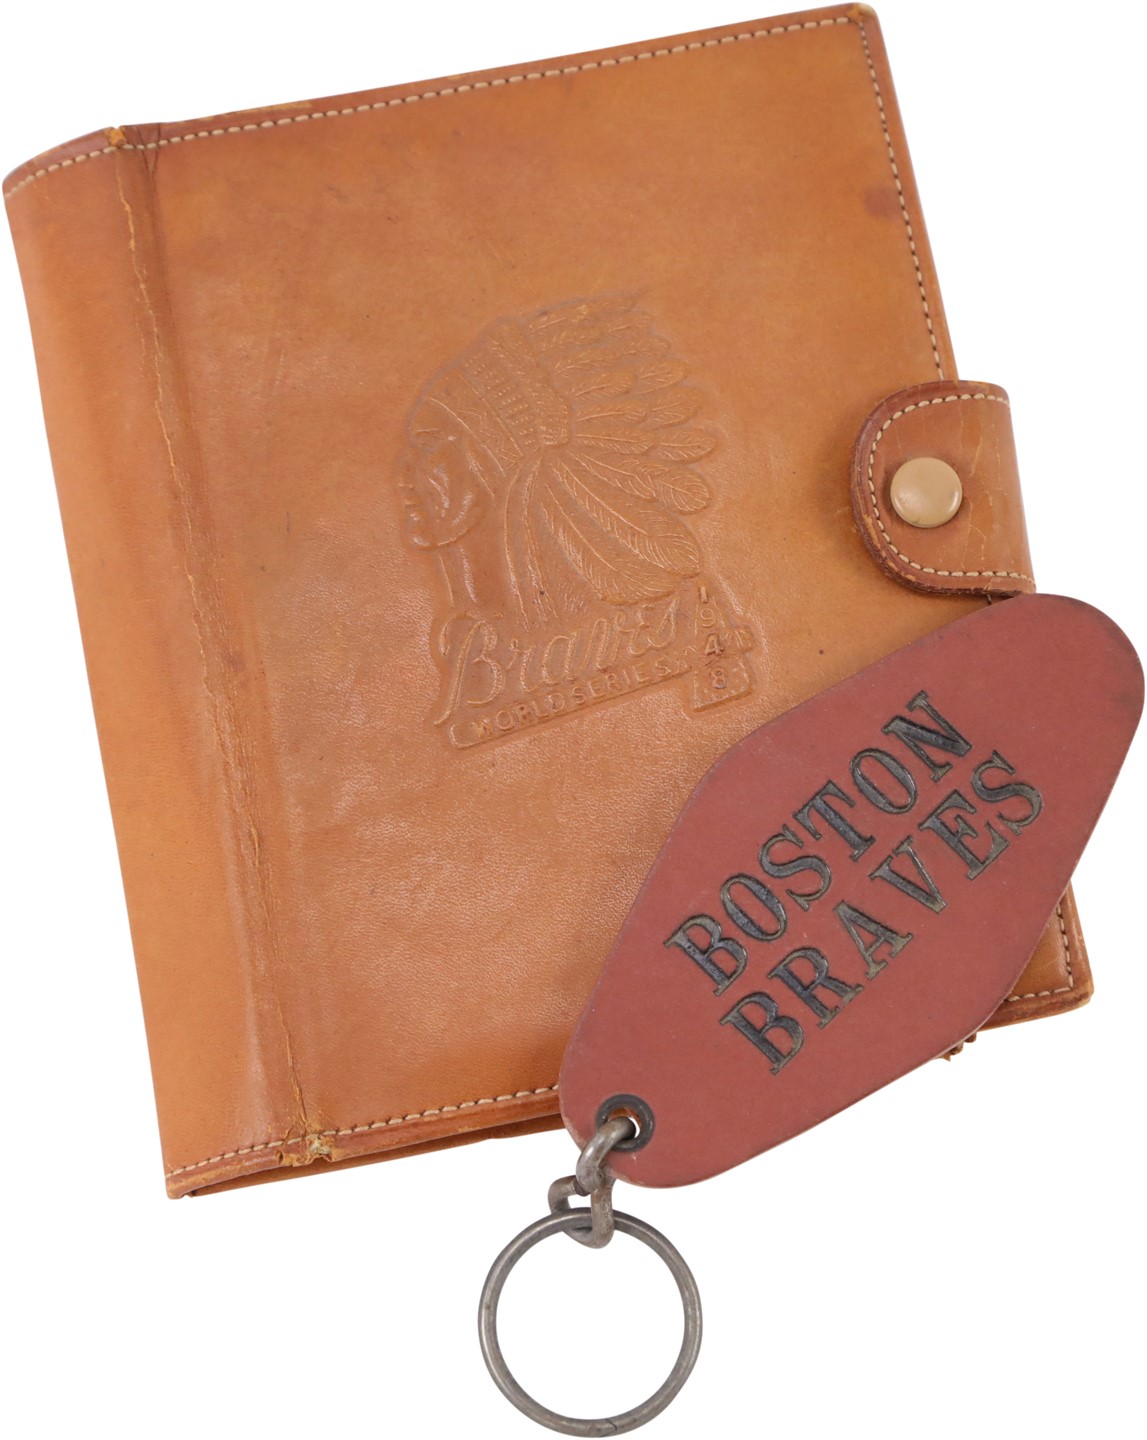 Boston Sports - 1948 Boston Braves Leather Wallet and Locker Roon Key Chain